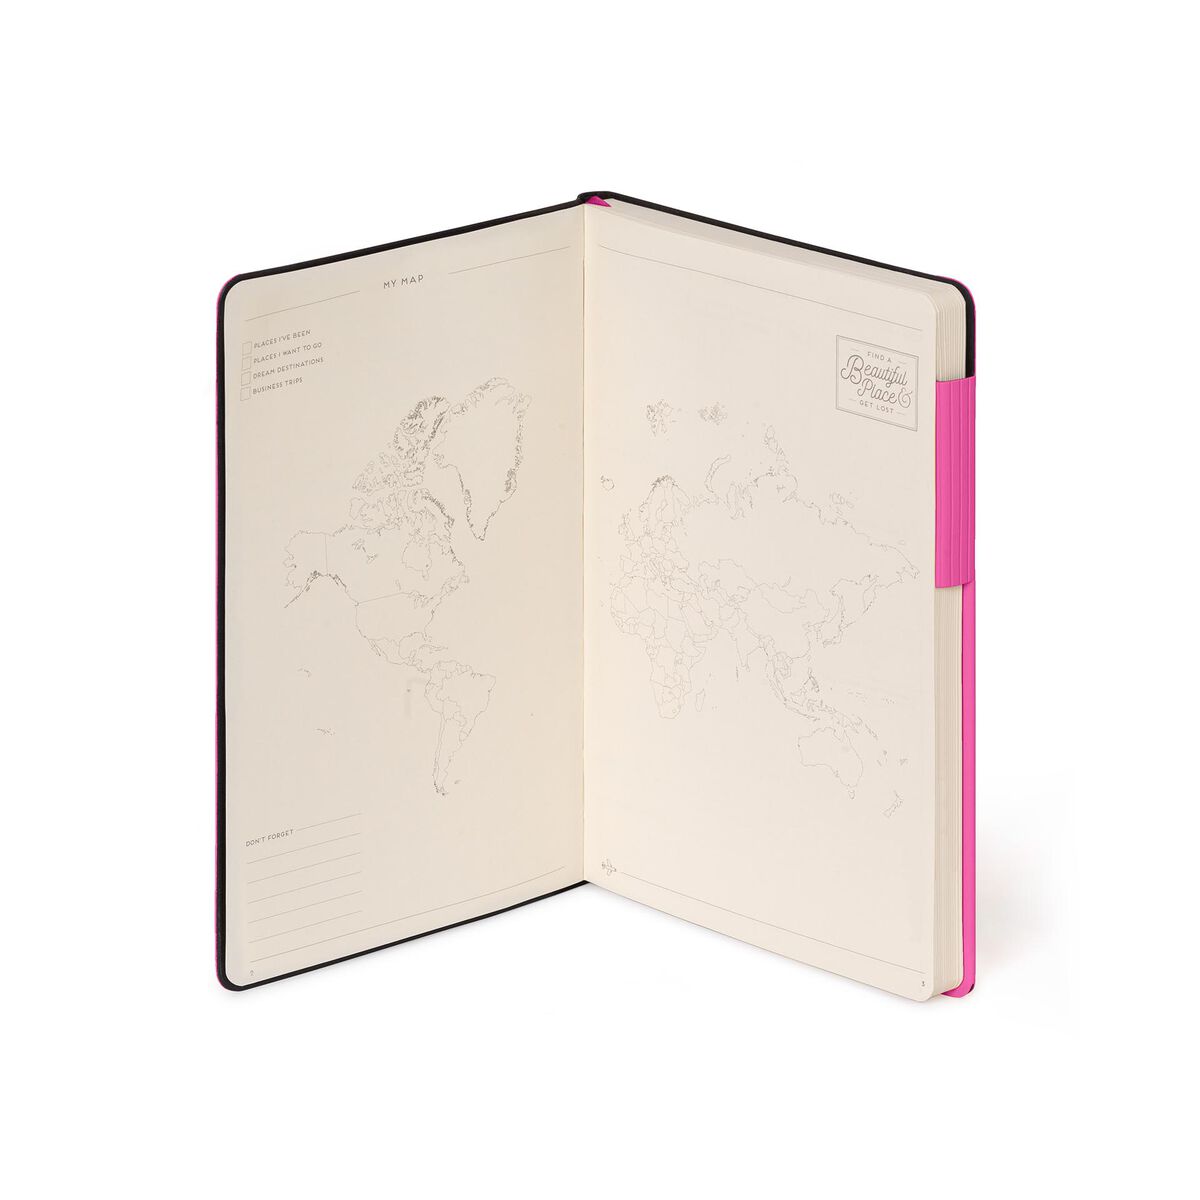 My Notebook - Plain - Medium, , zoo